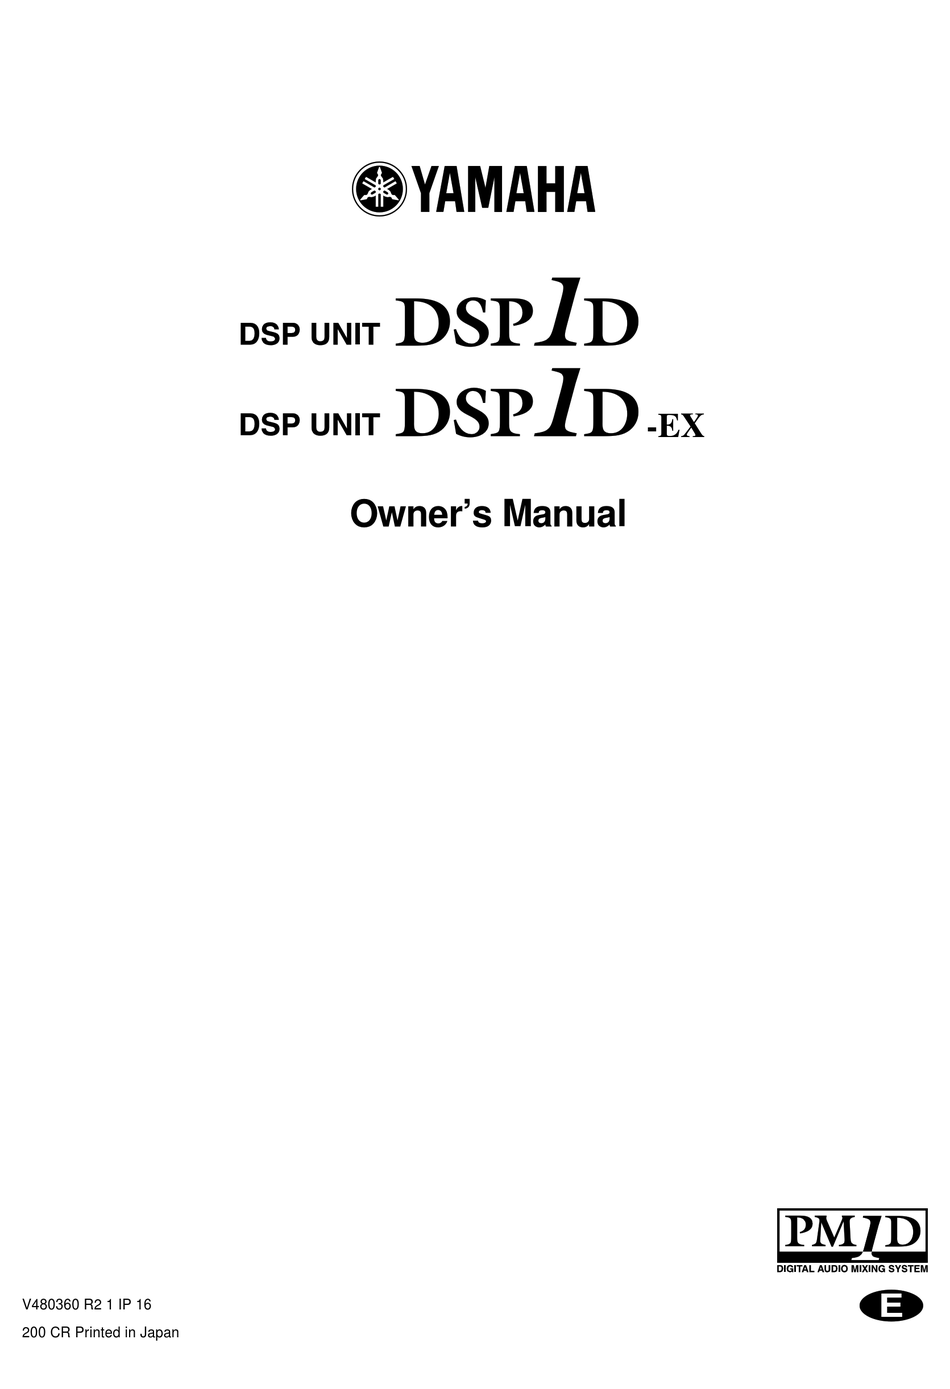 YAMAHA DSP1D OWNER'S MANUAL Pdf Download | ManualsLib